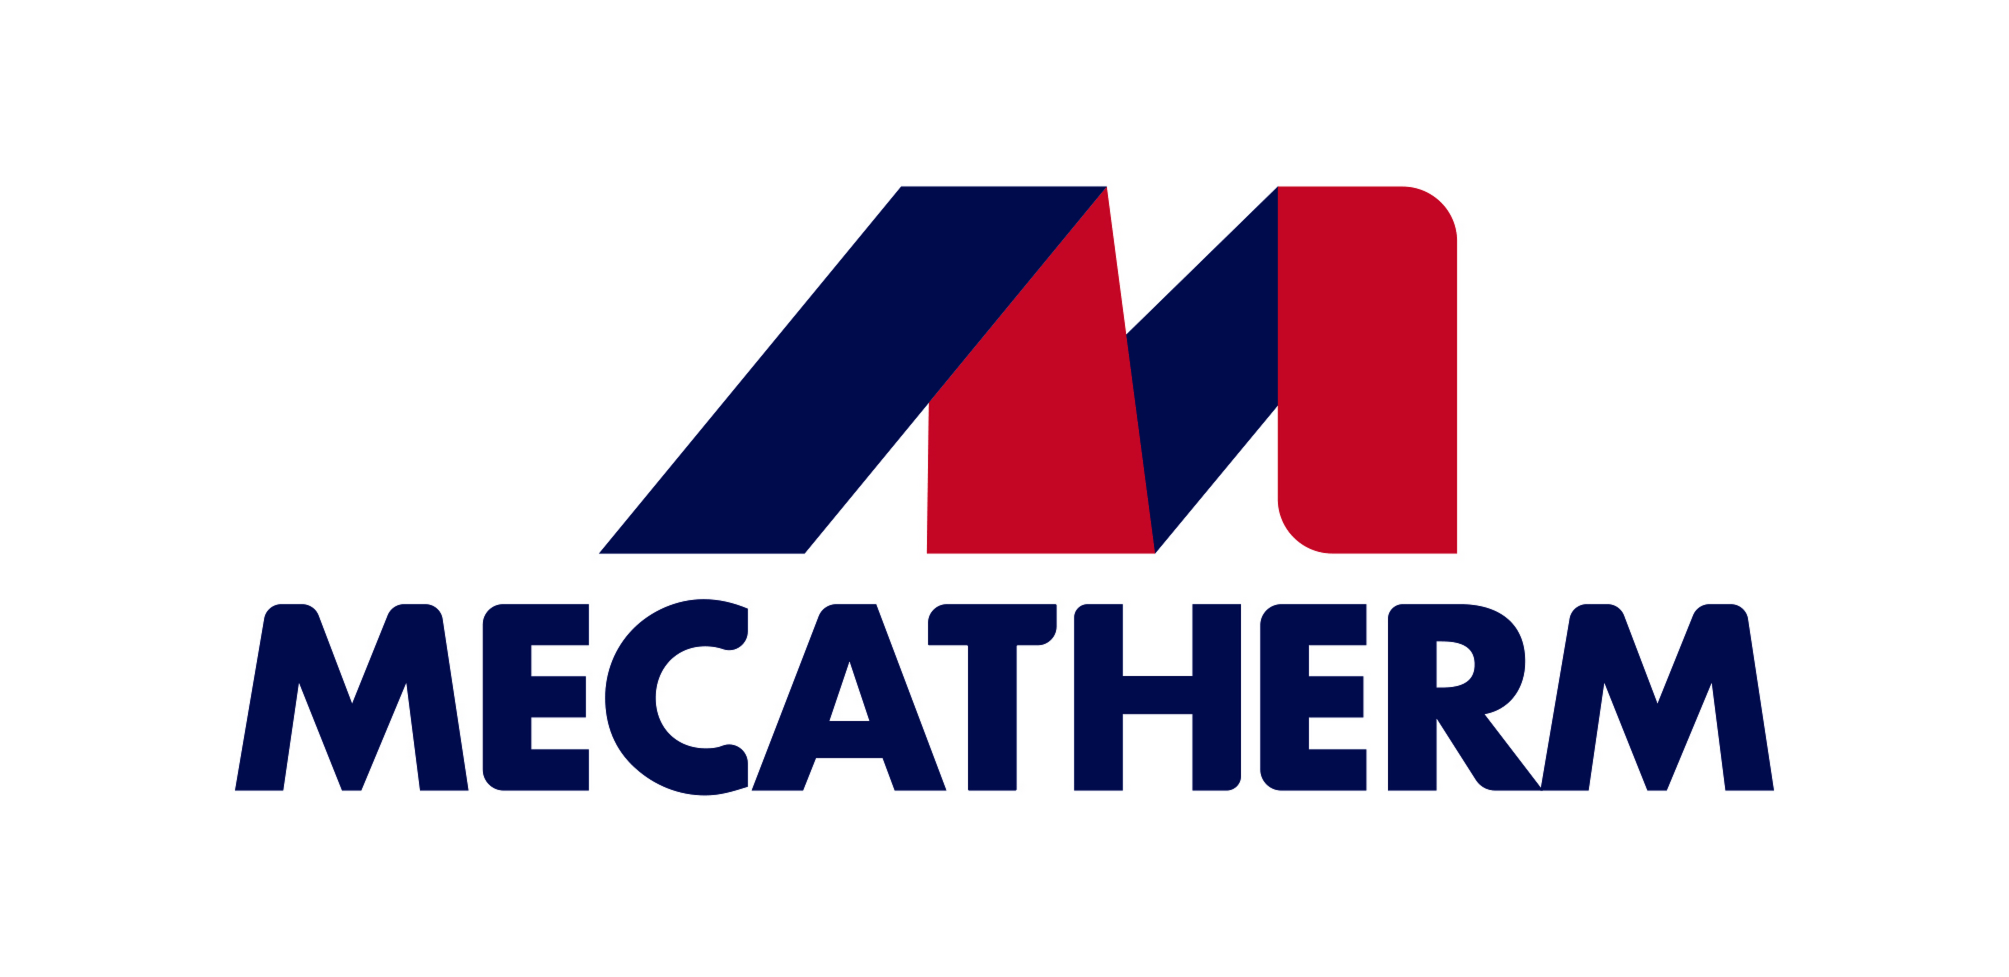 French Food Manufacturers Logo - Mecatherm SA - Gulfood Manufacturing 6 - 8 November 2018, Dubai ...